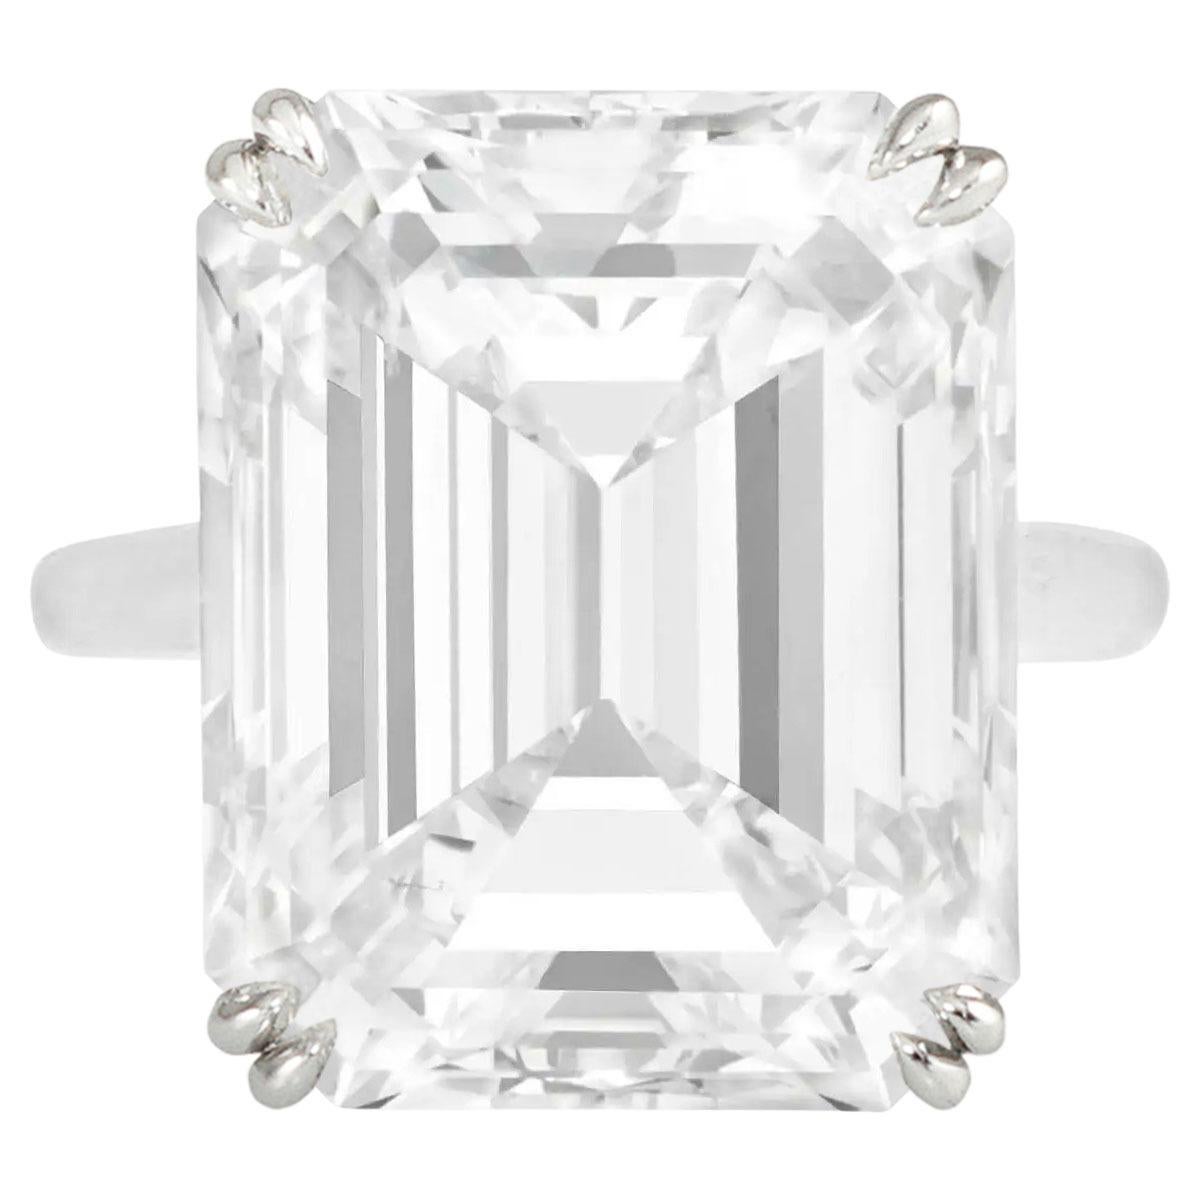 10 carat emerald cut diamond ring